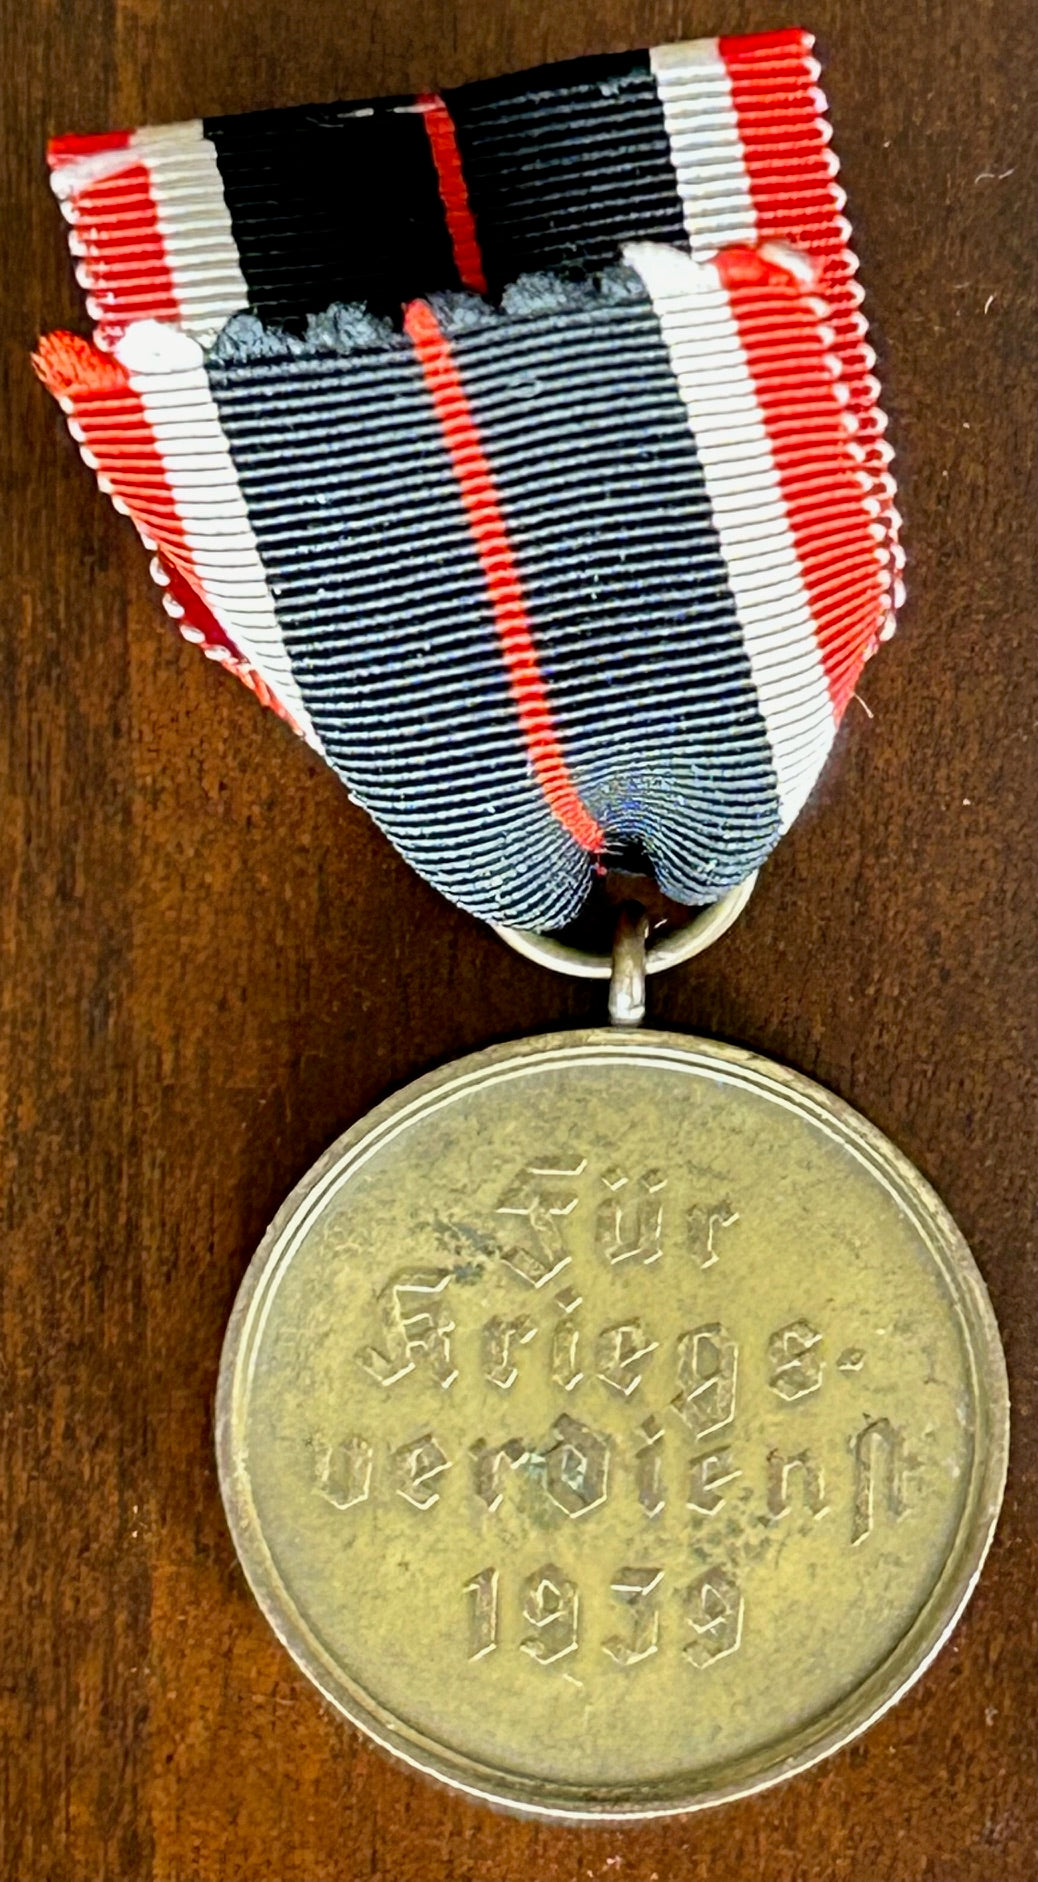 War merit medal w/ ribbon